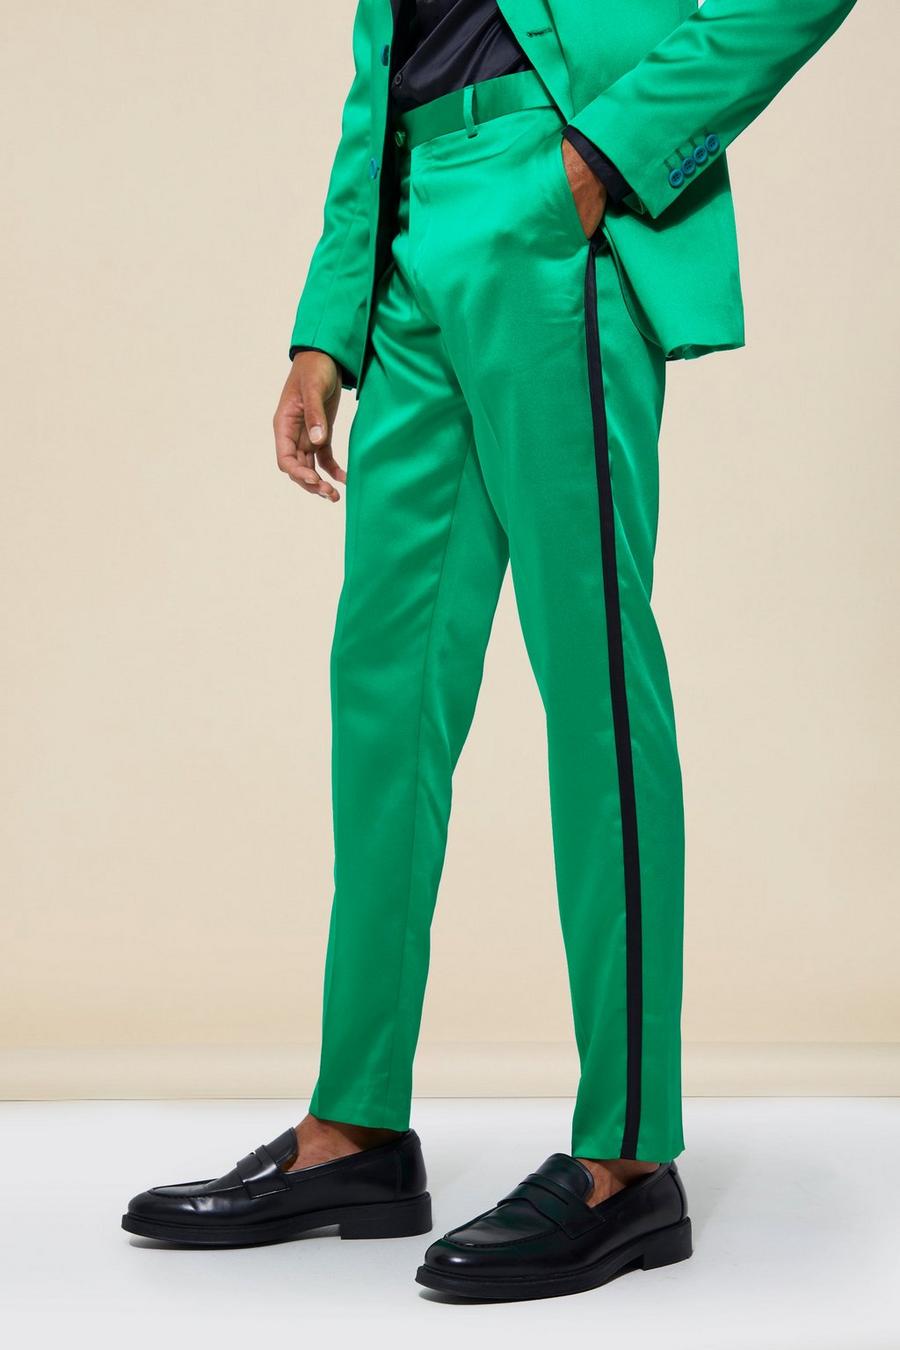 Pantaloni completo Skinny Fit in raso con striscia laterale, Green verde